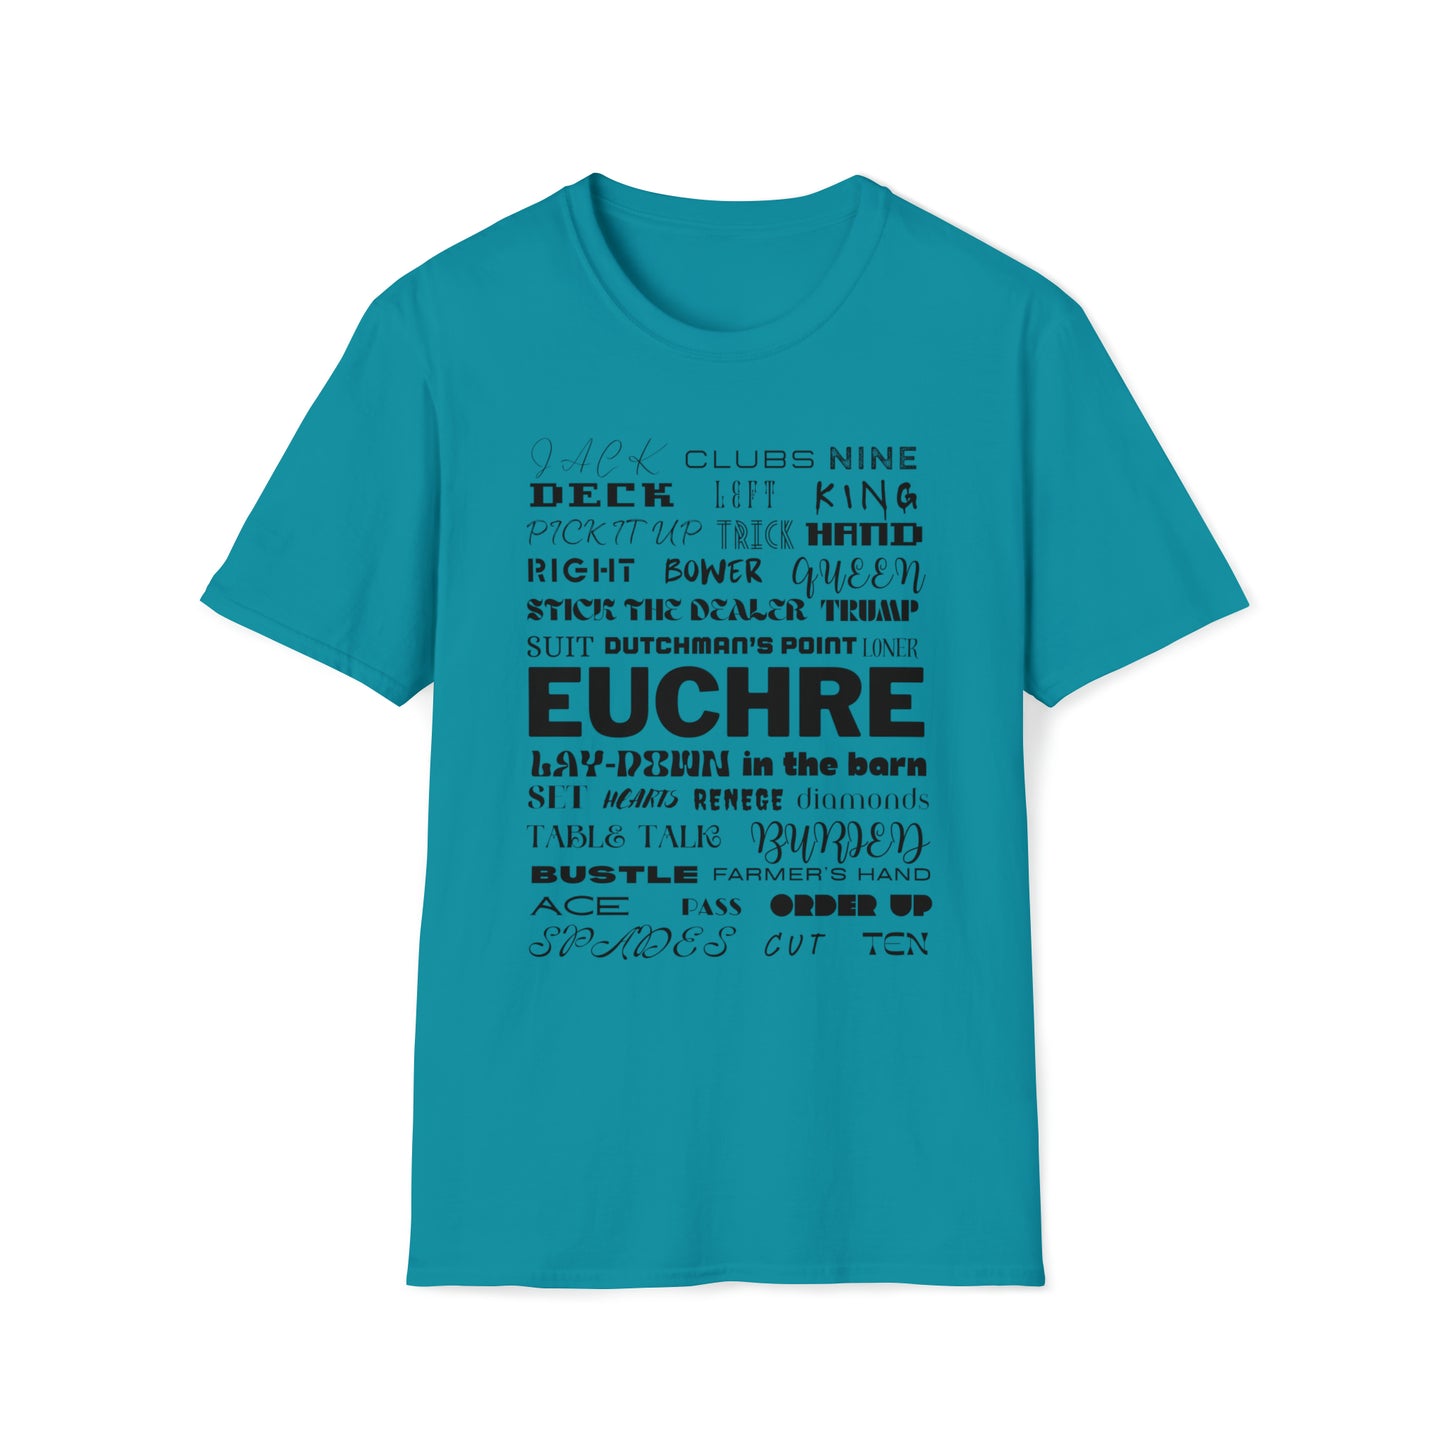 Euchre Terms T-shirt